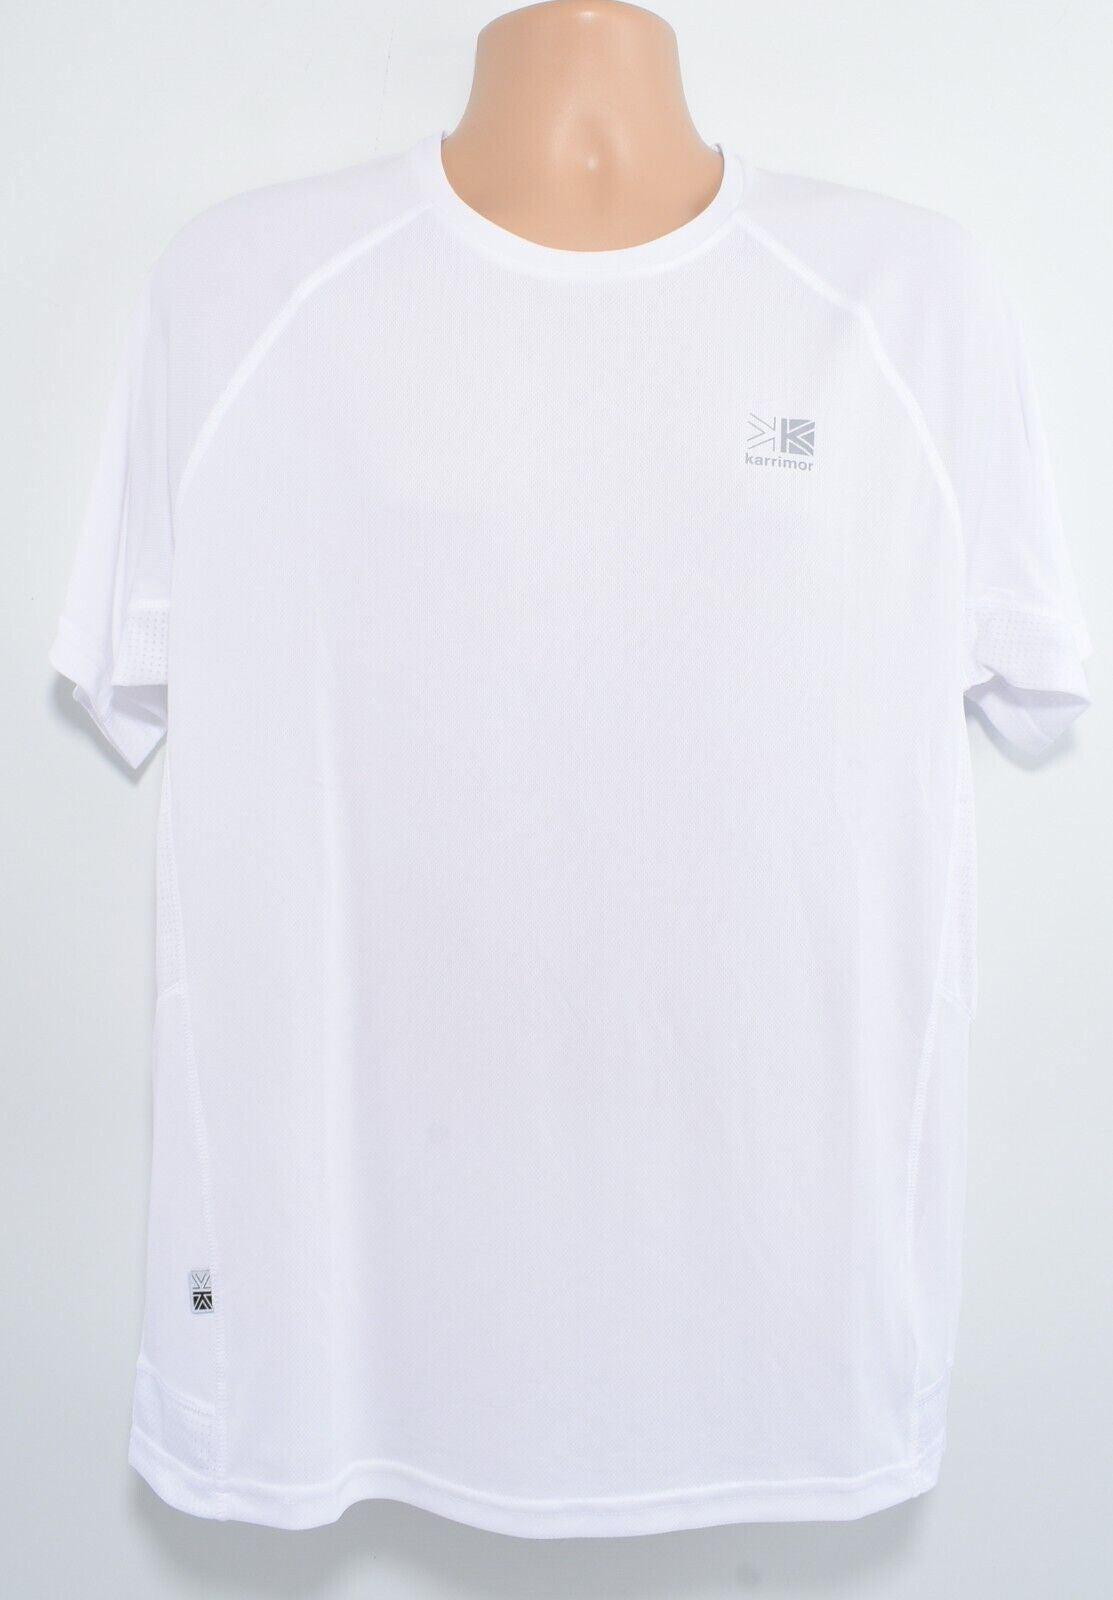 KARRIMOR Mens Short Sleeve Running Tee, Activewear T-shirt, White, size M